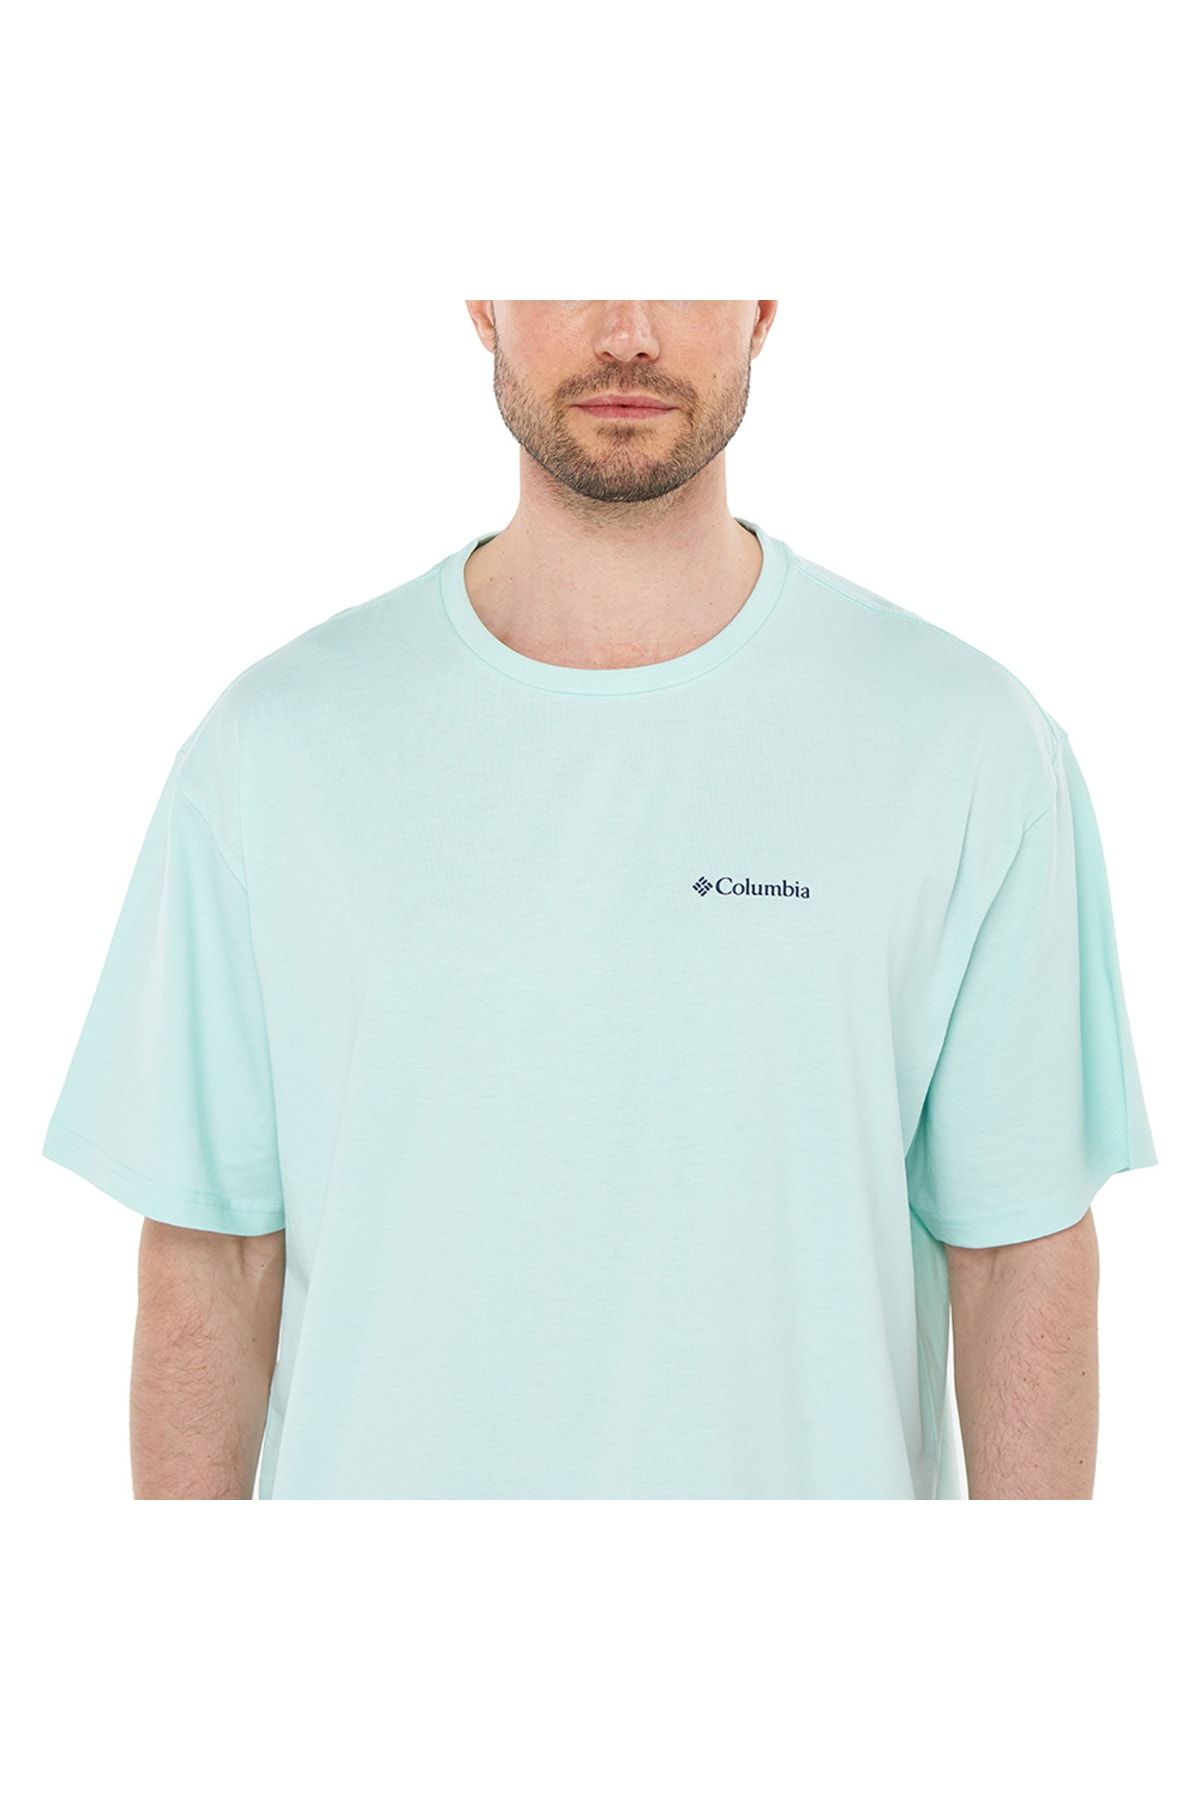 Columbia Csc Basic Oversize Erkek Kısa Kollu T-shirt